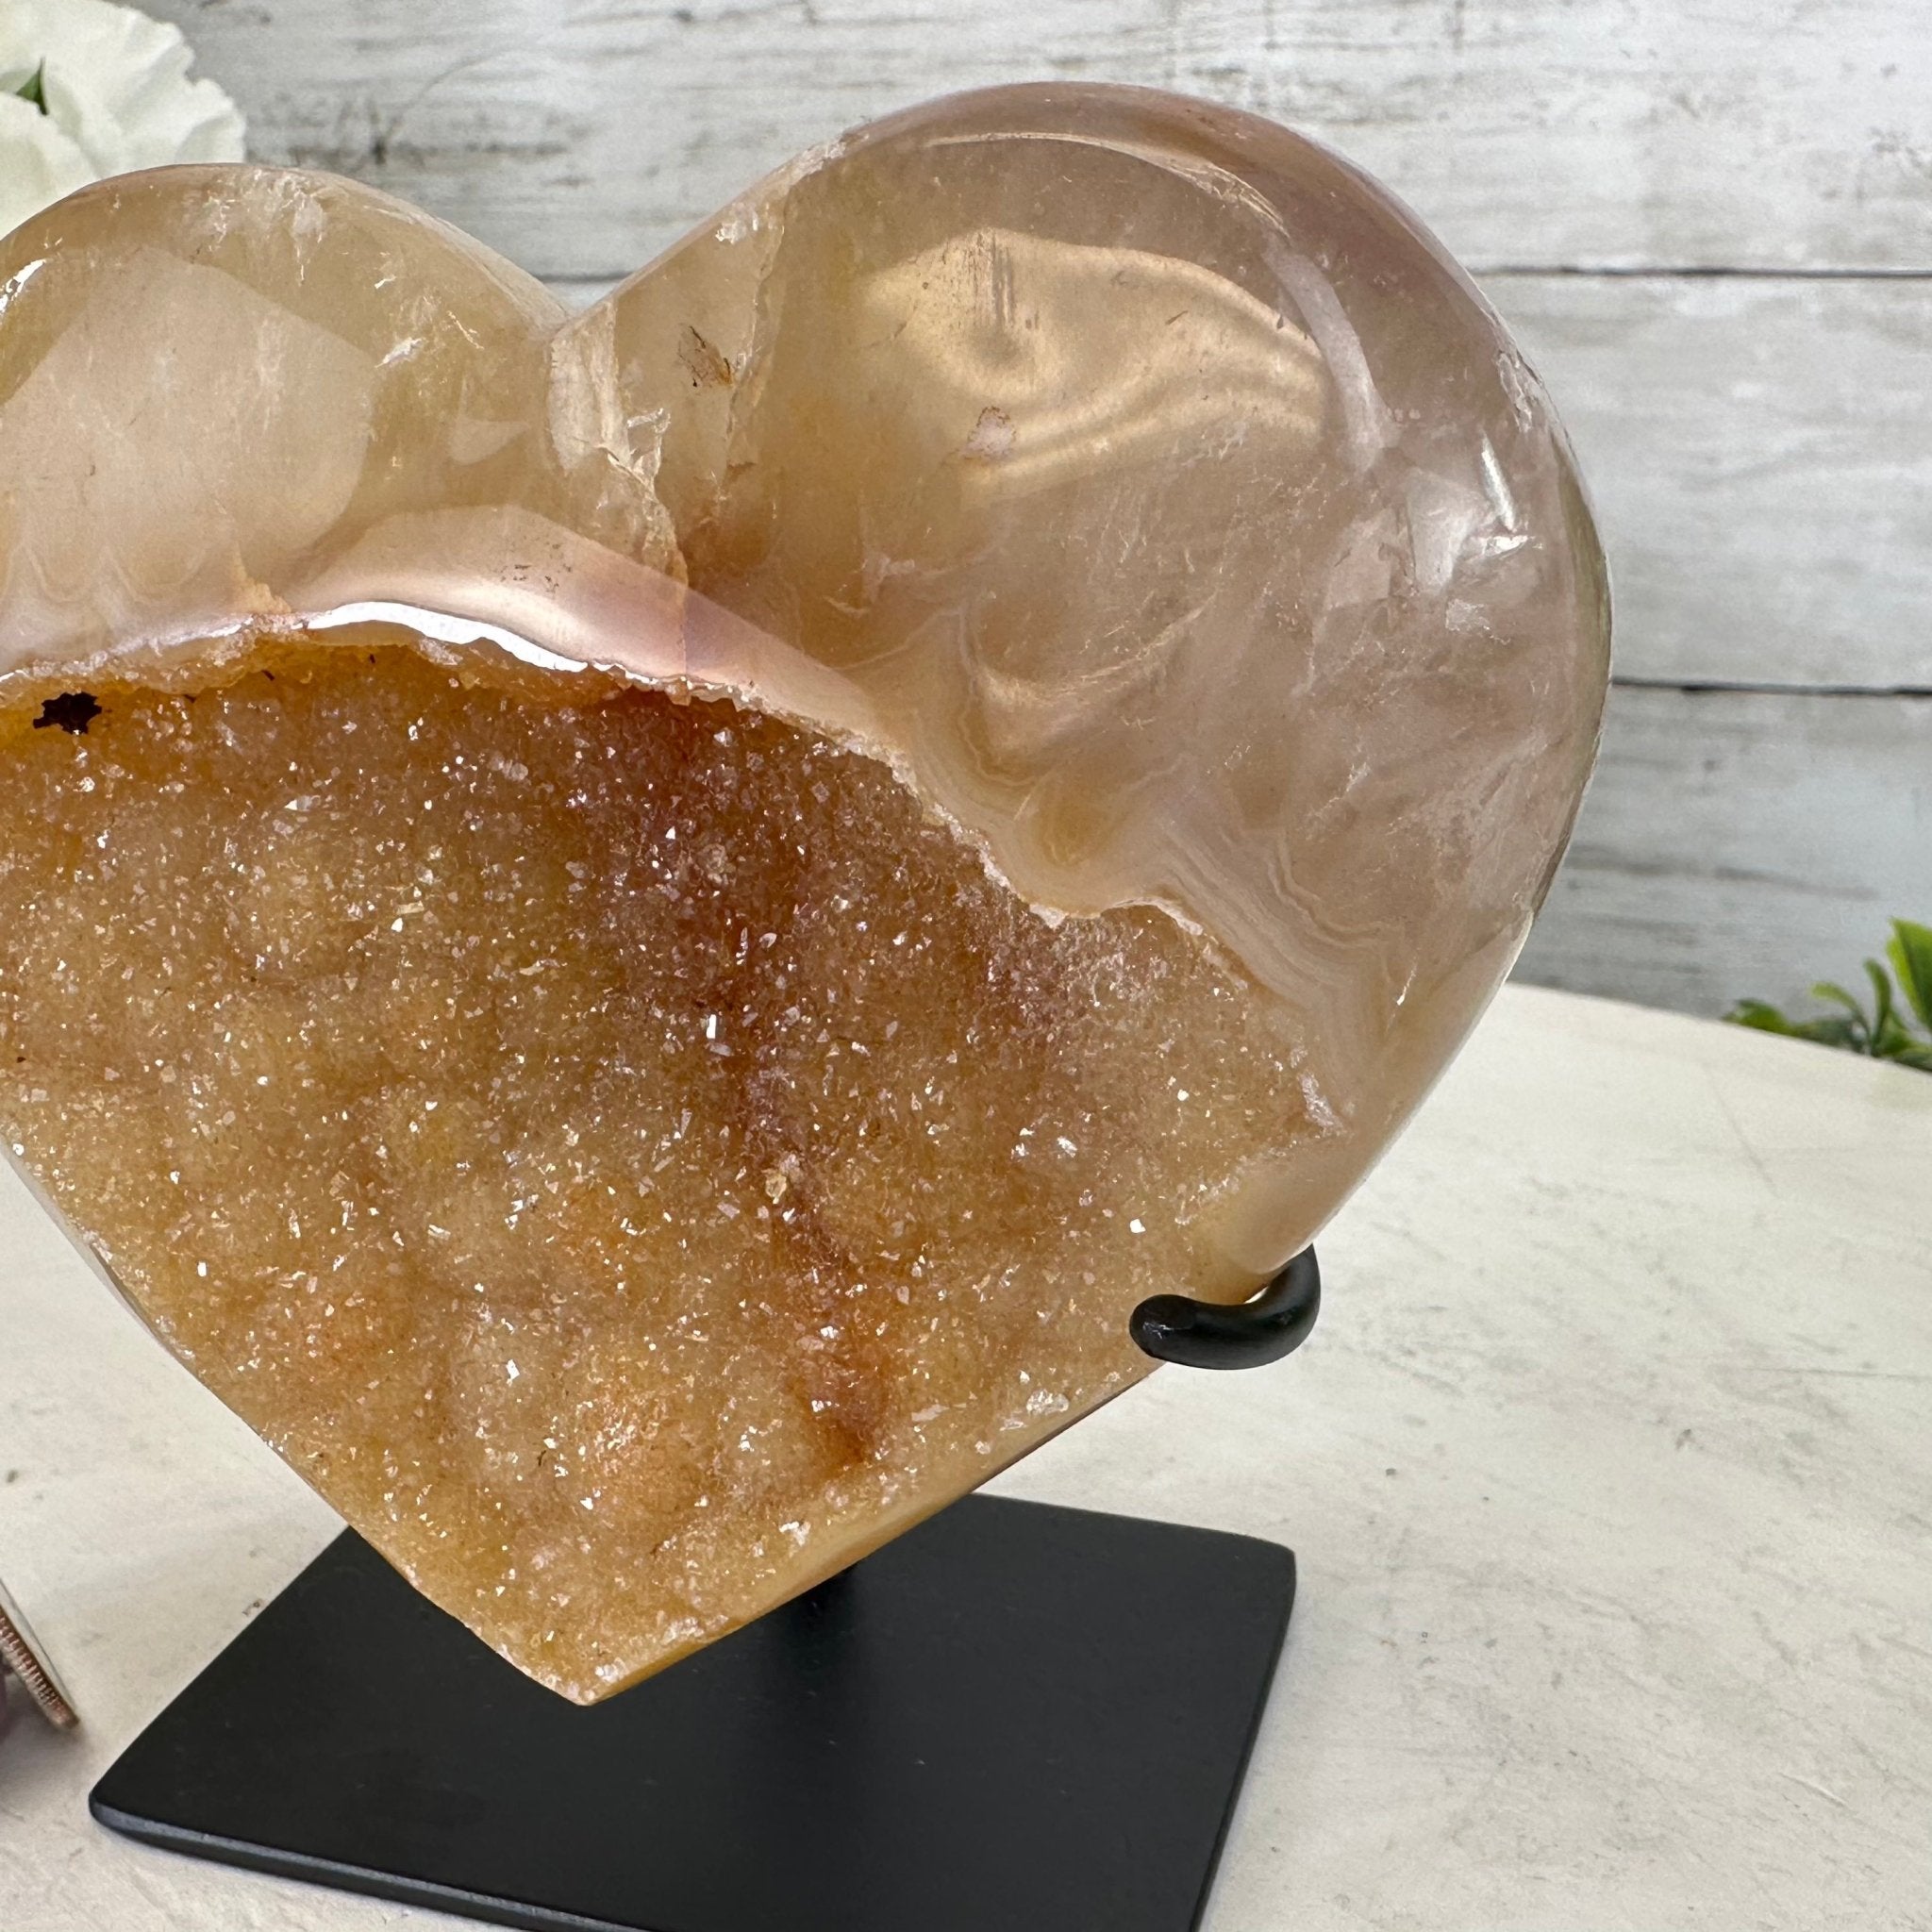 Polished Agate Heart Geode on a Metal Stand, 1.5 lbs & 4.4" Tall, Model #5468-0017 by Brazil Gems - Brazil GemsBrazil GemsPolished Agate Heart Geode on a Metal Stand, 1.5 lbs & 4.4" Tall, Model #5468-0017 by Brazil GemsHearts5468-0017